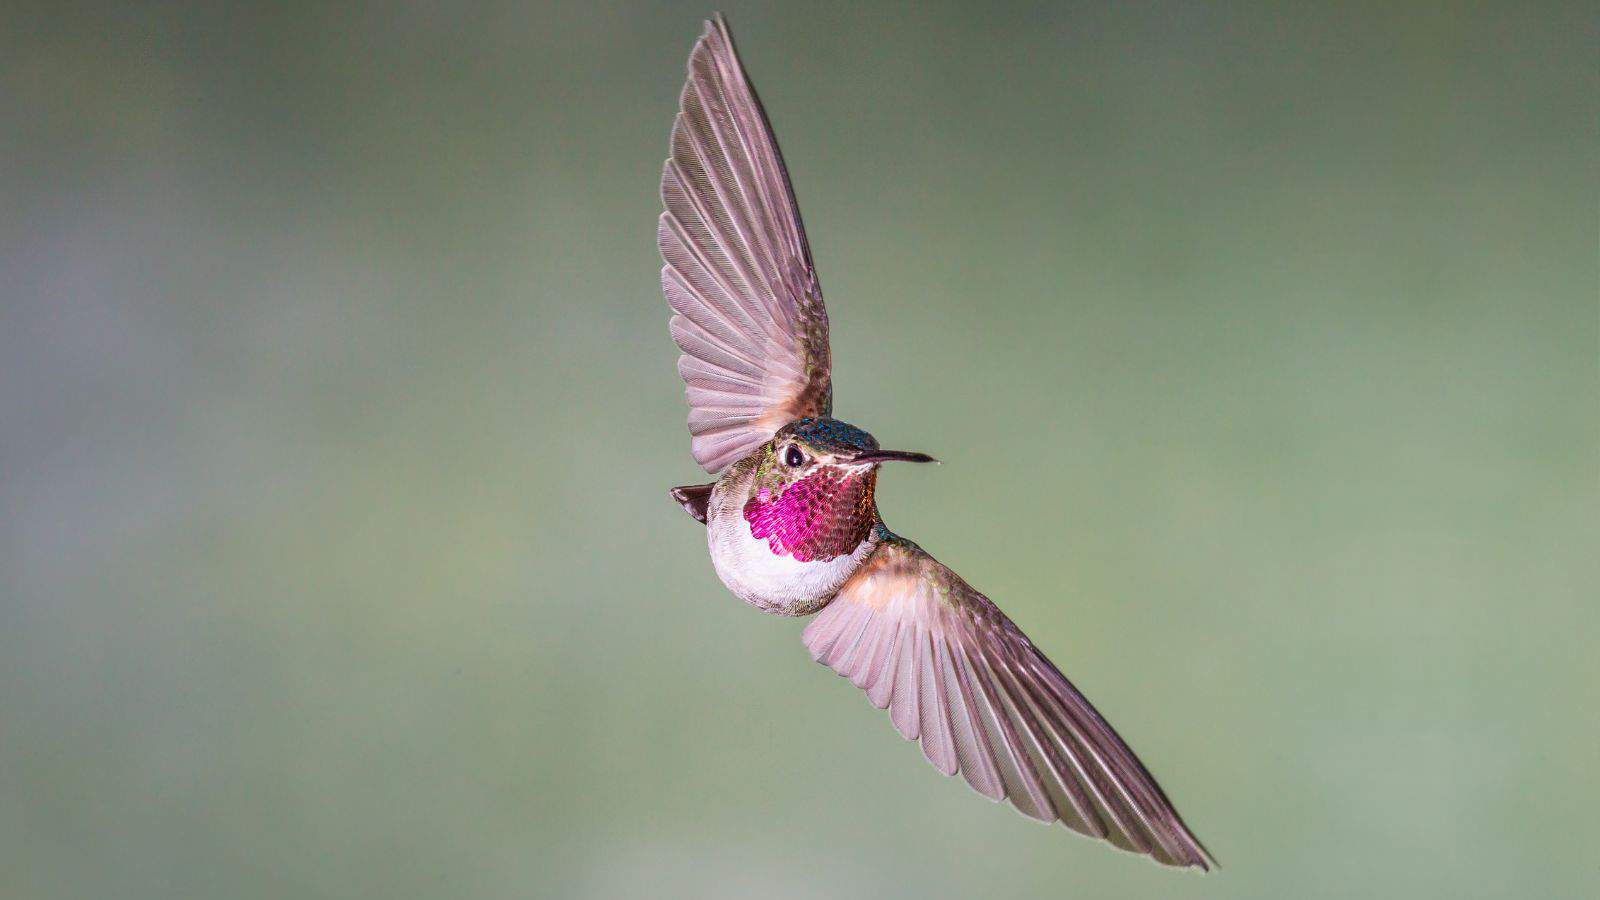 Broad-tailed hummingbirds